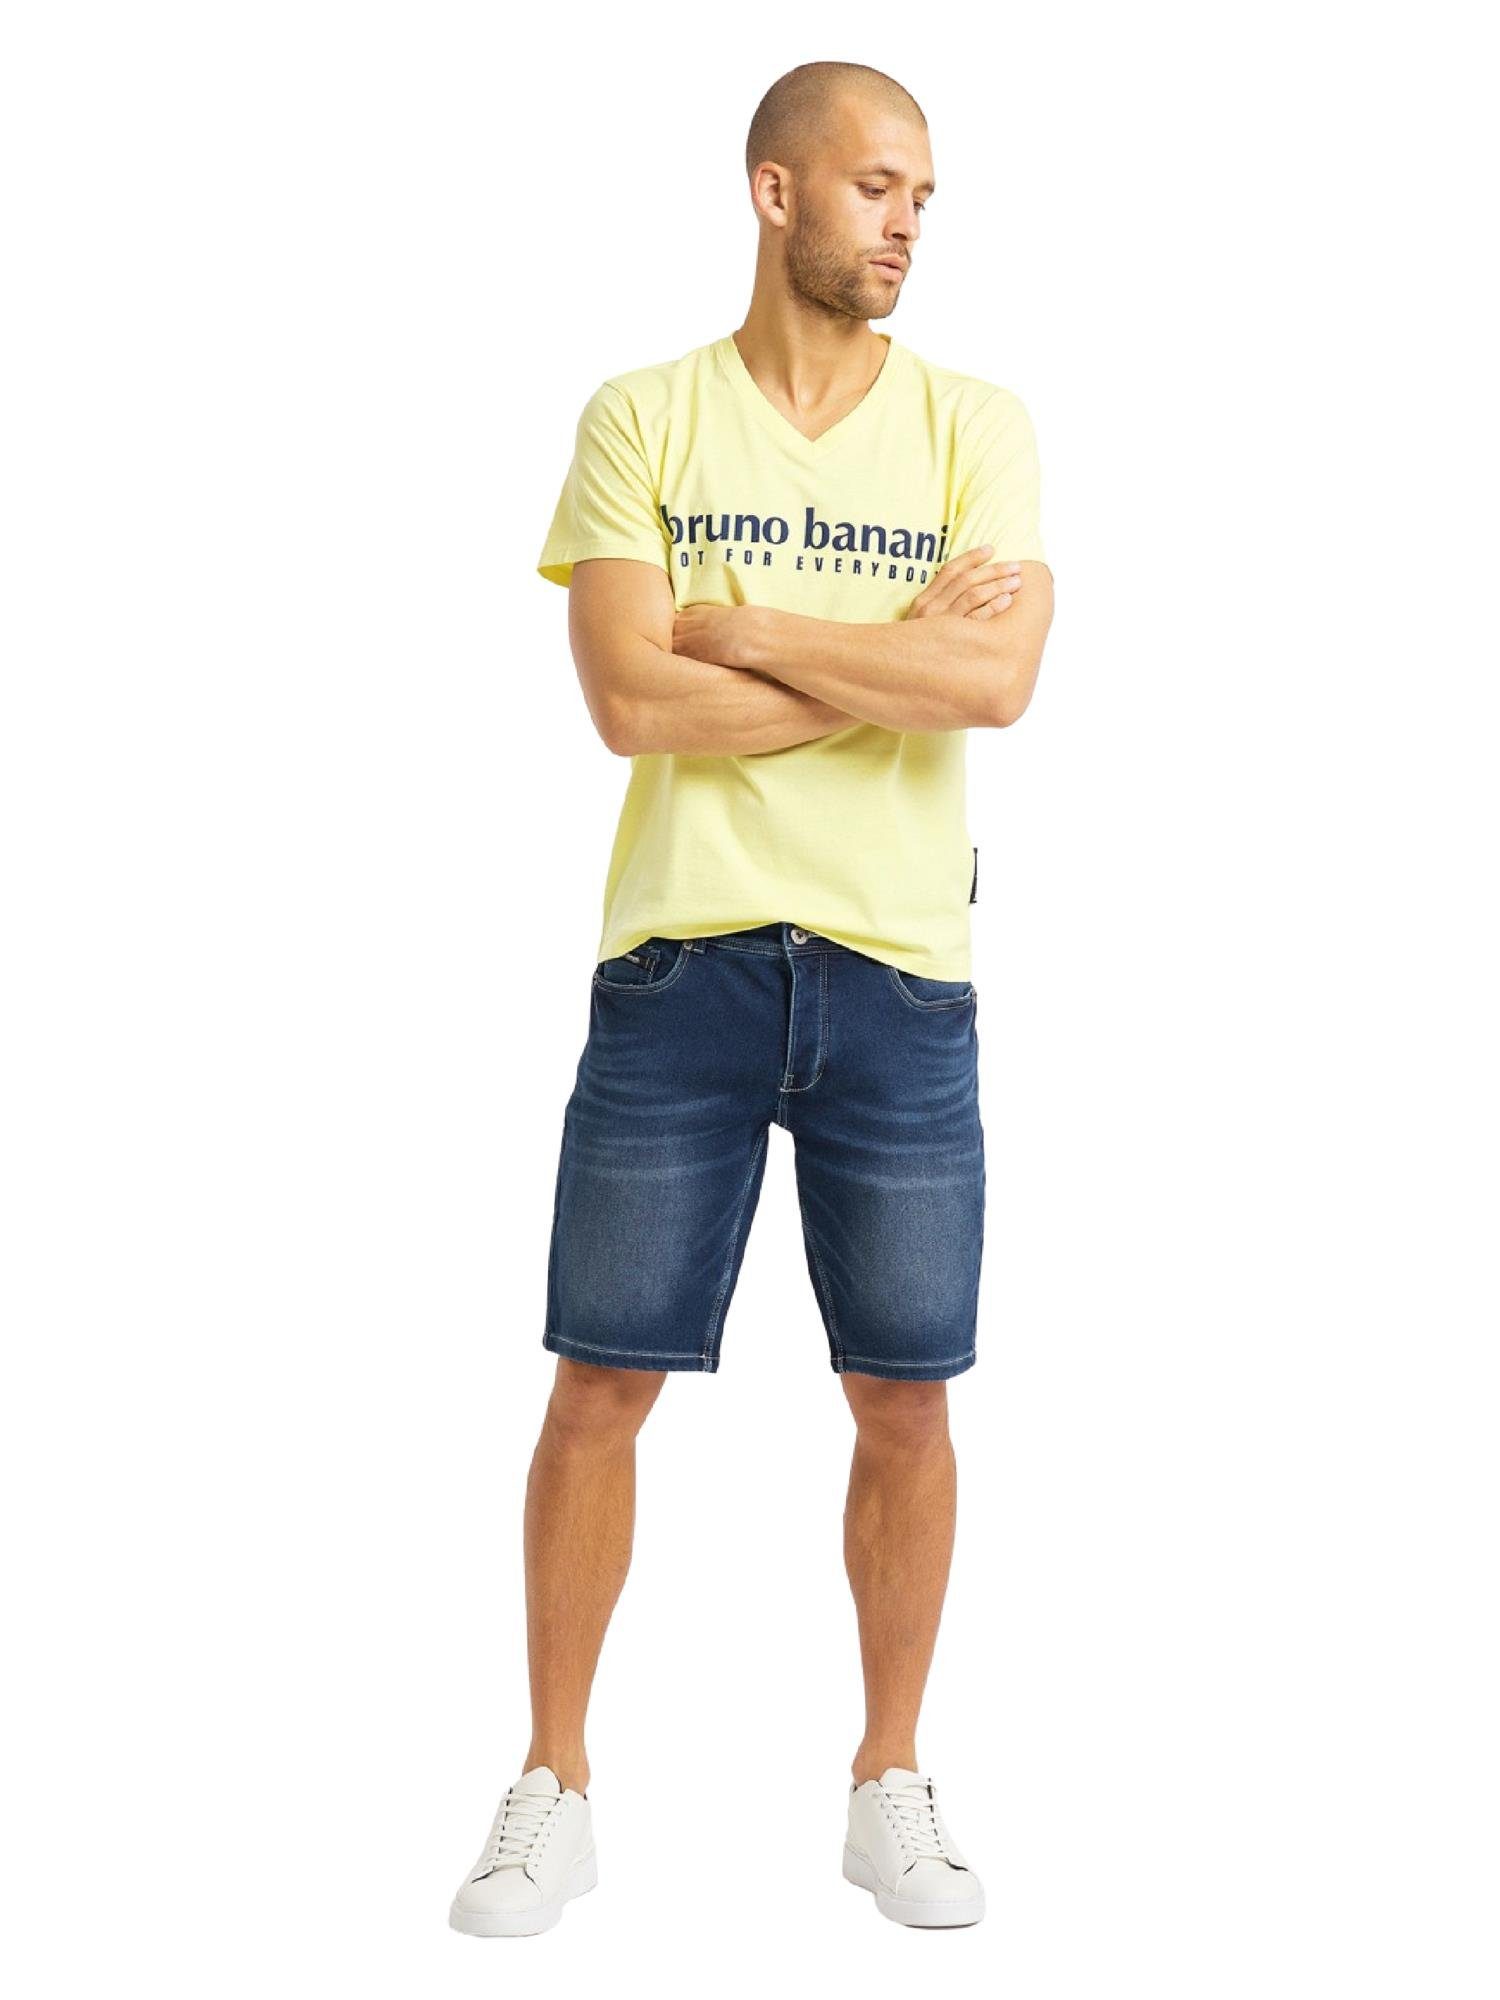 Banani T-Shirt Bruno TAYLOR